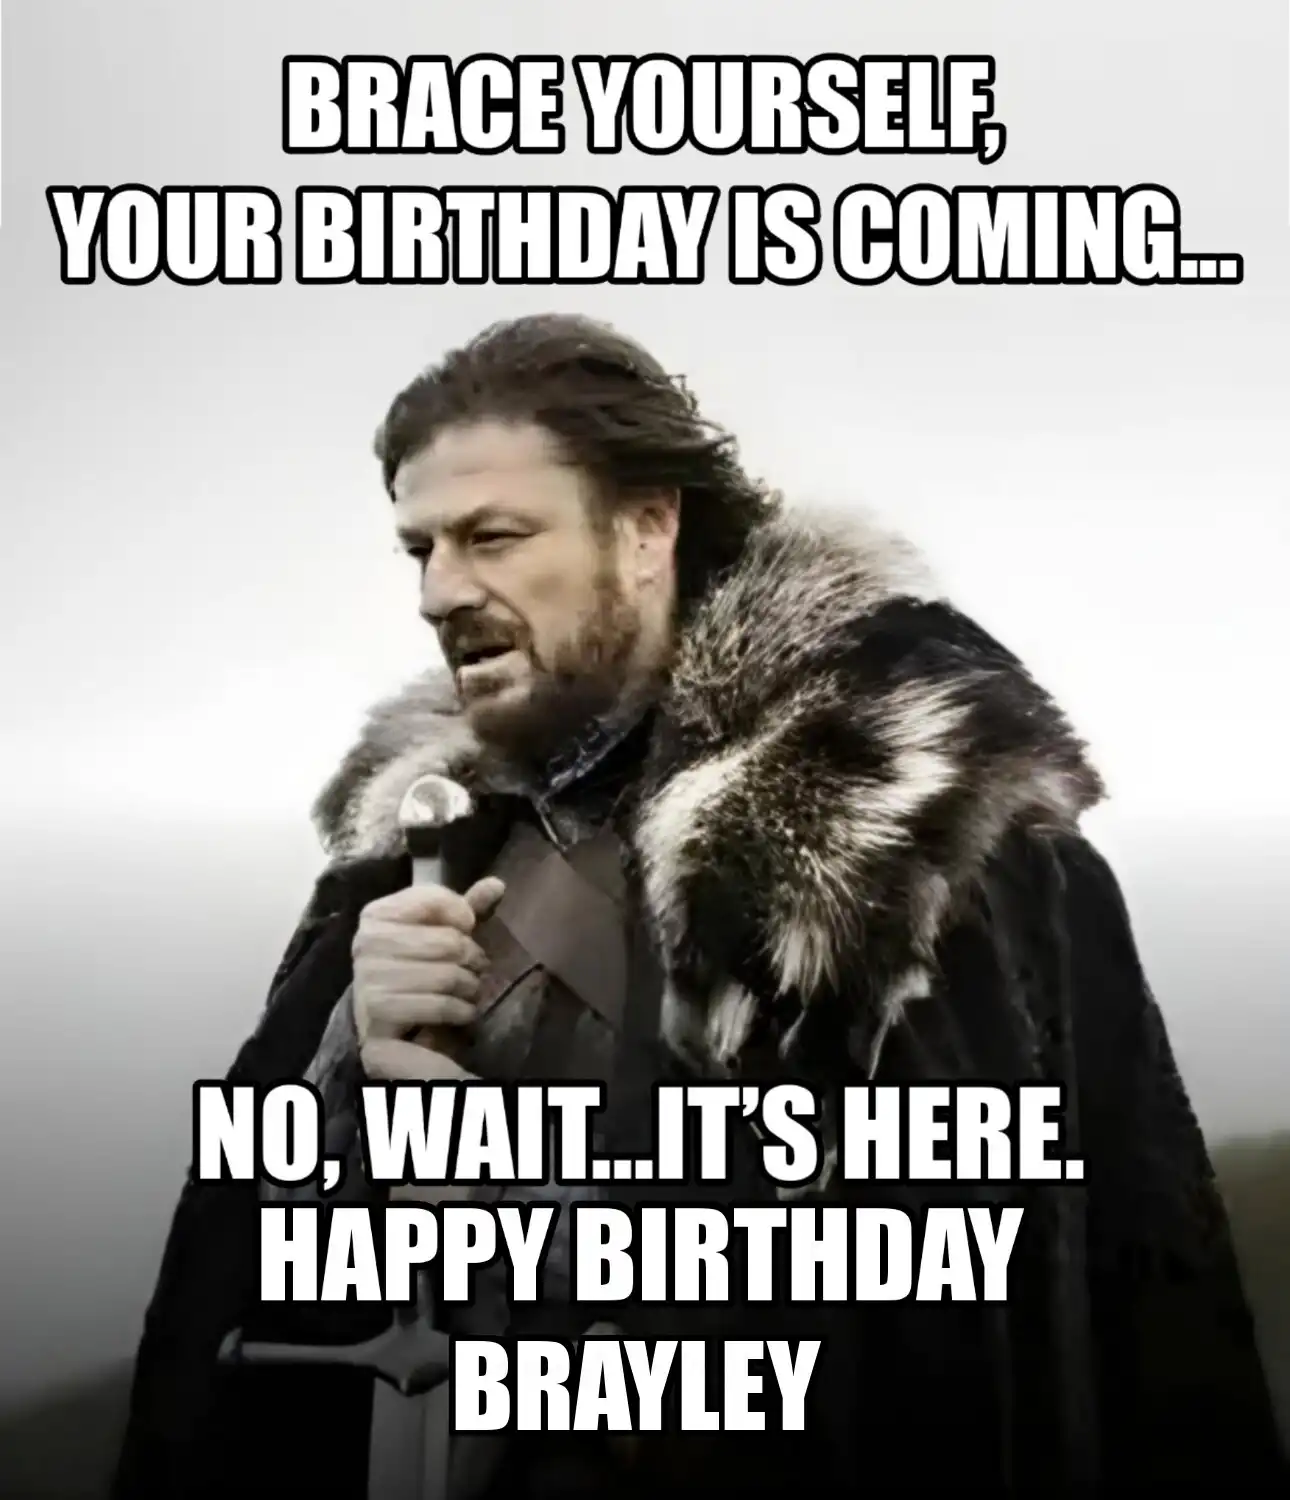 Happy Birthday Brayley Brace Yourself Your Birthday Is Coming Meme